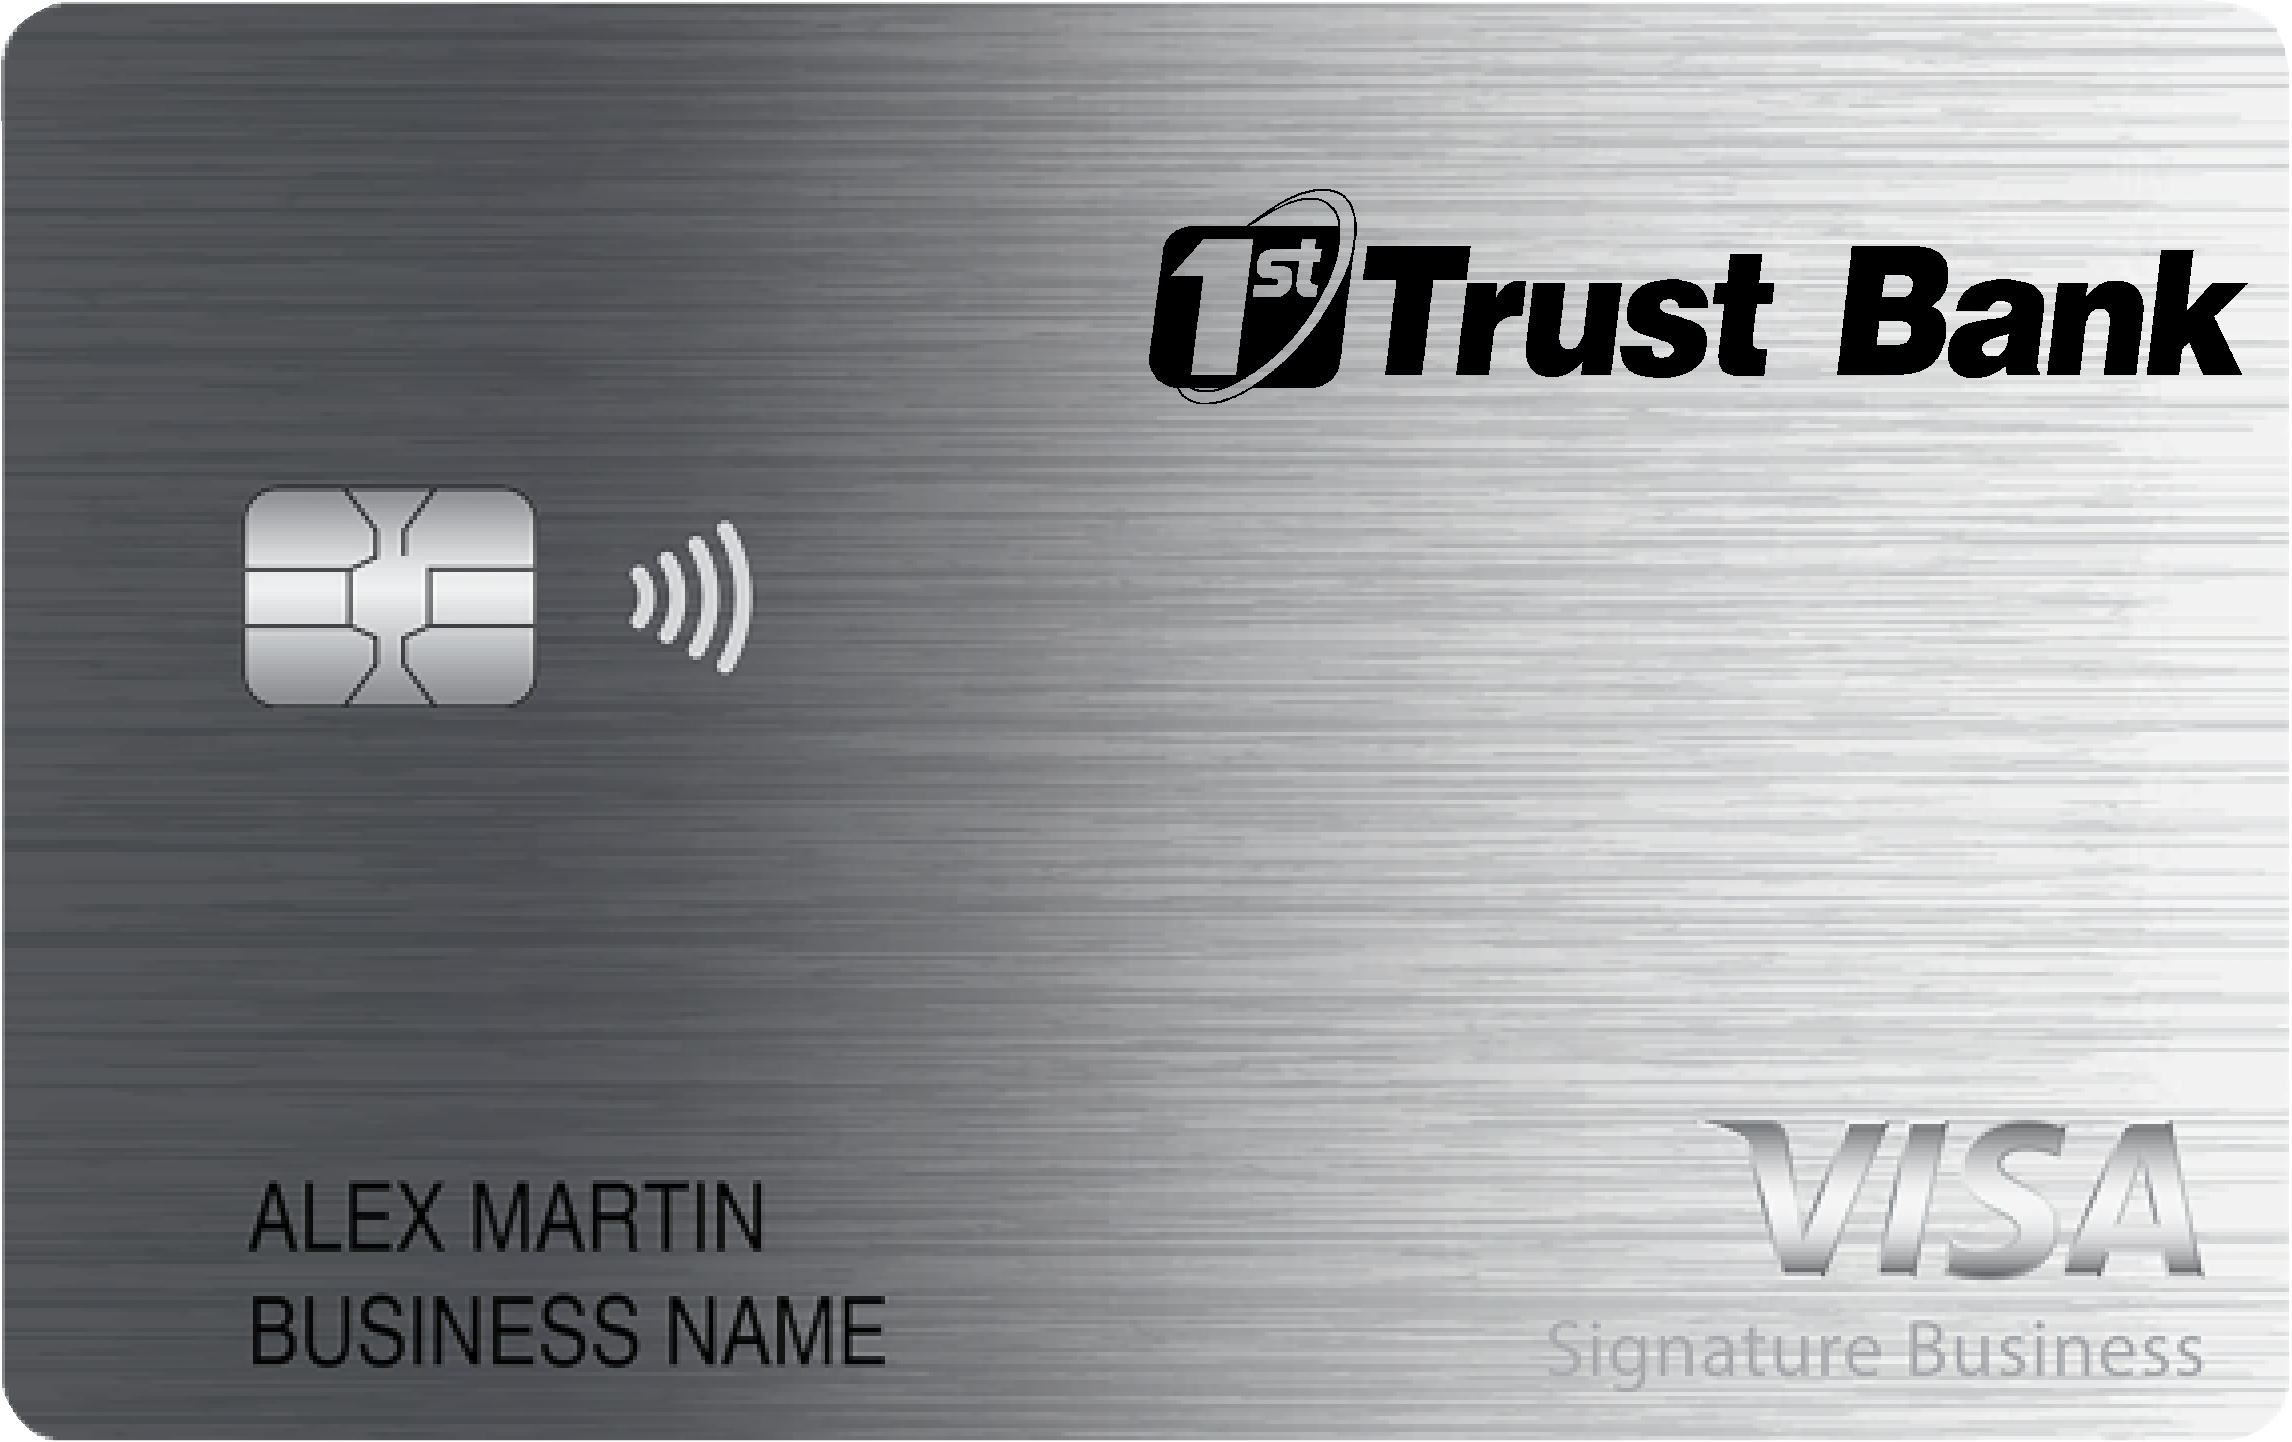 1st Trust Bank Smart Business Rewards  Card